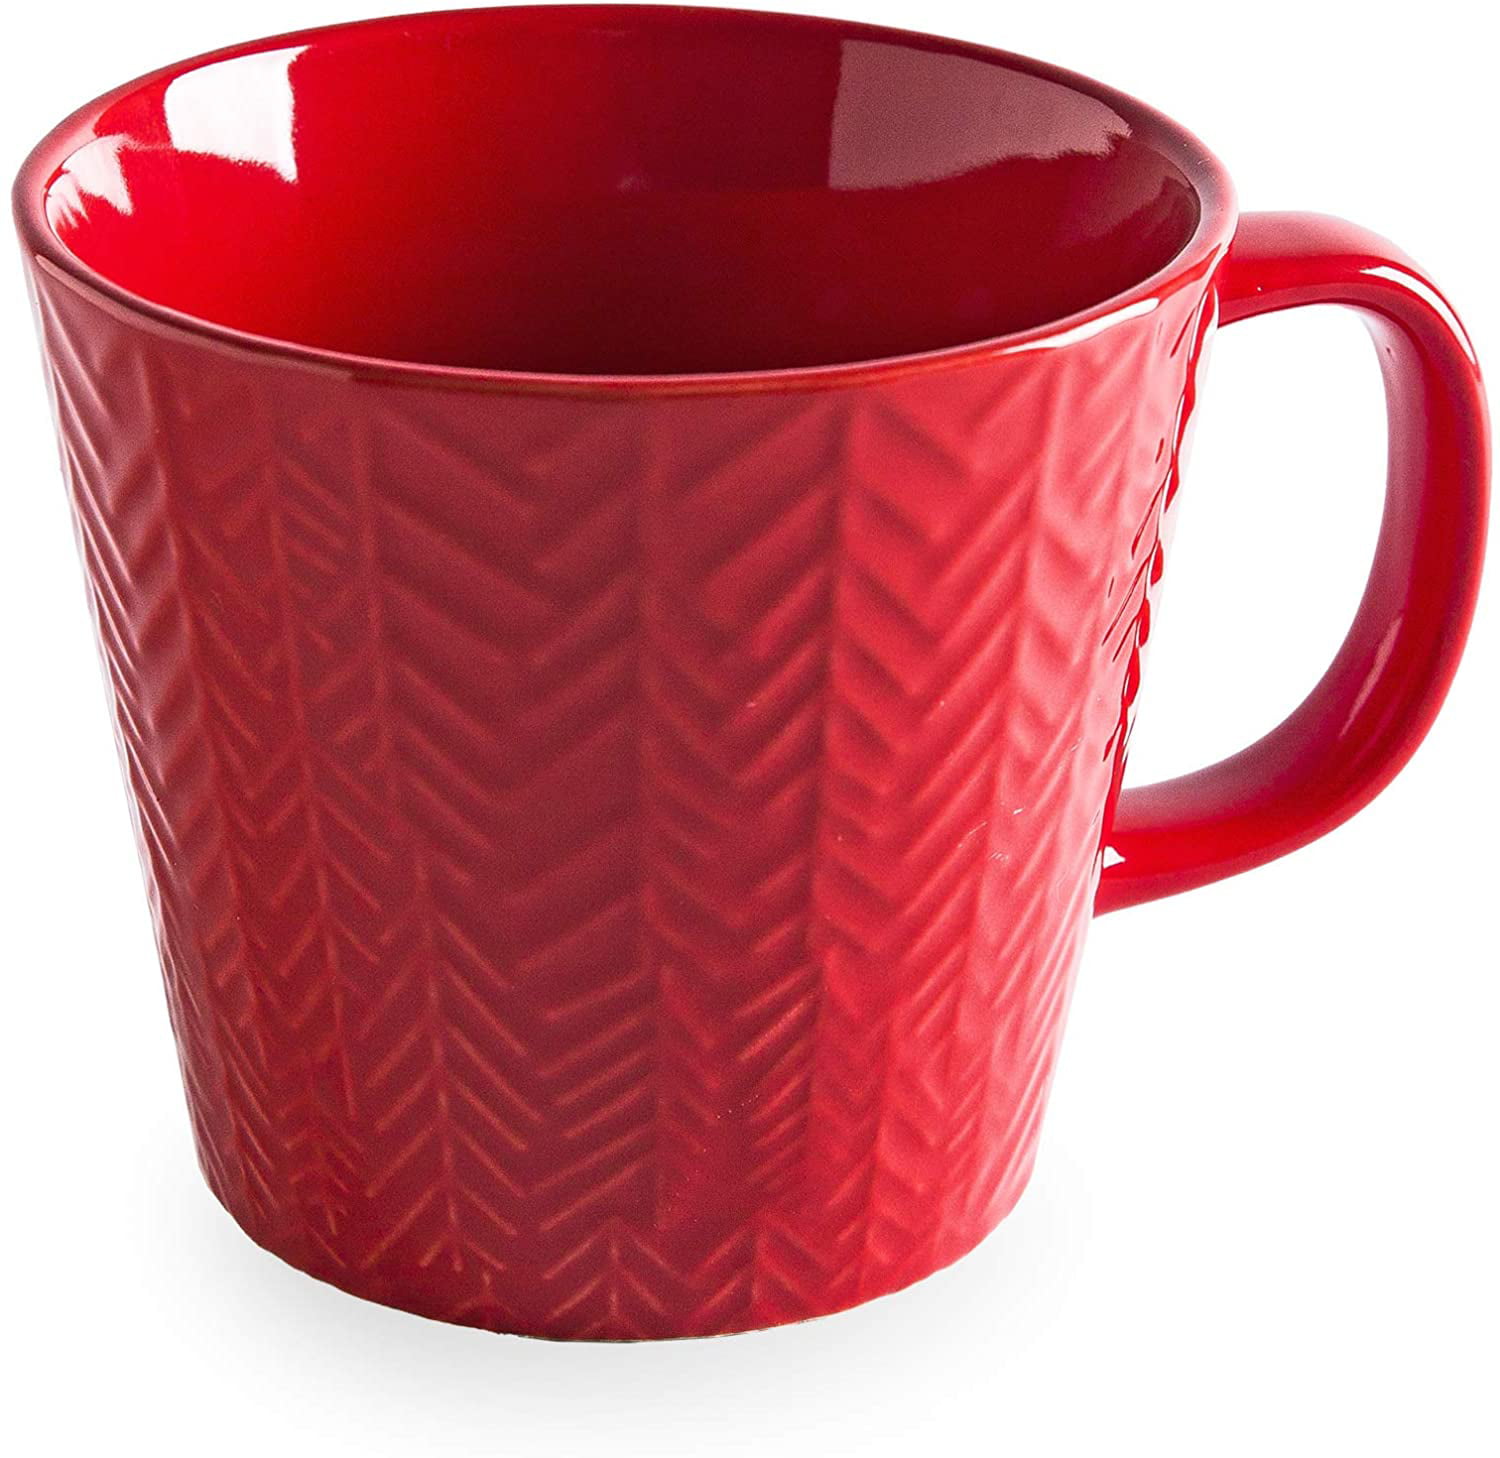 Minecraft Red TNT Block Ceramic Sculpted Coffee Mug Red Brand New! 